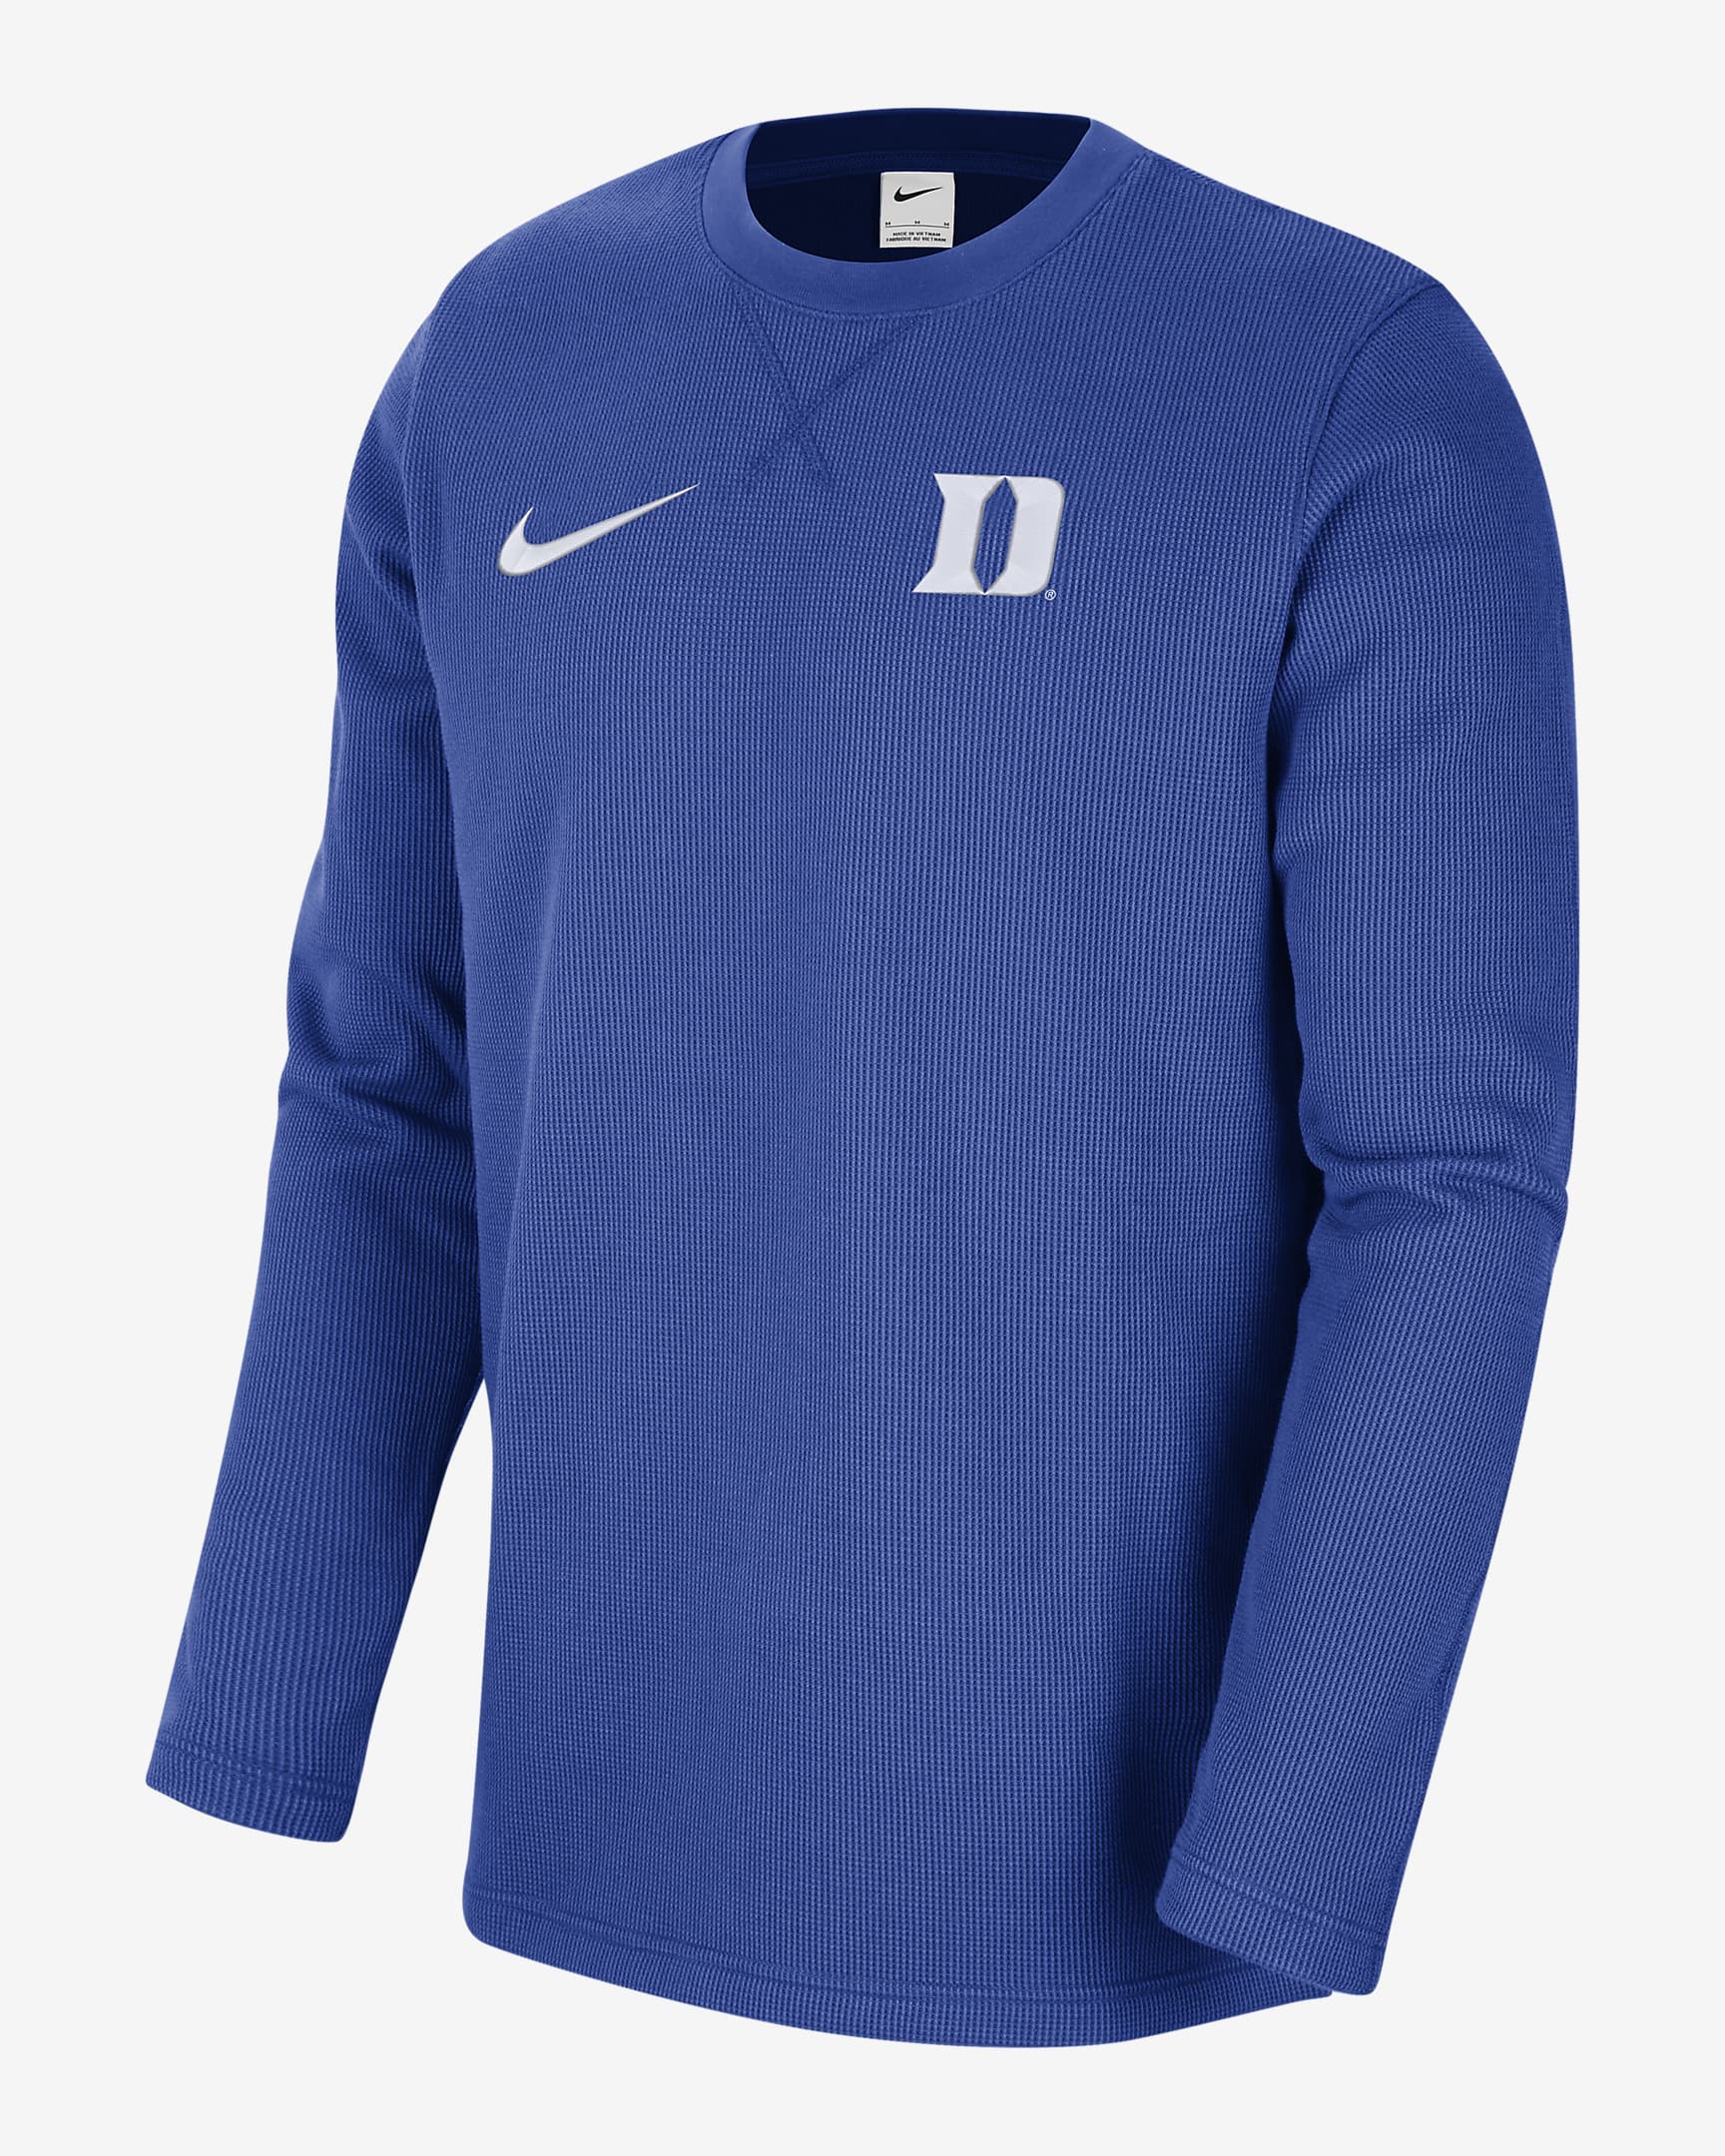 Duke Men's Nike College Long-Sleeve Top. Nike.com